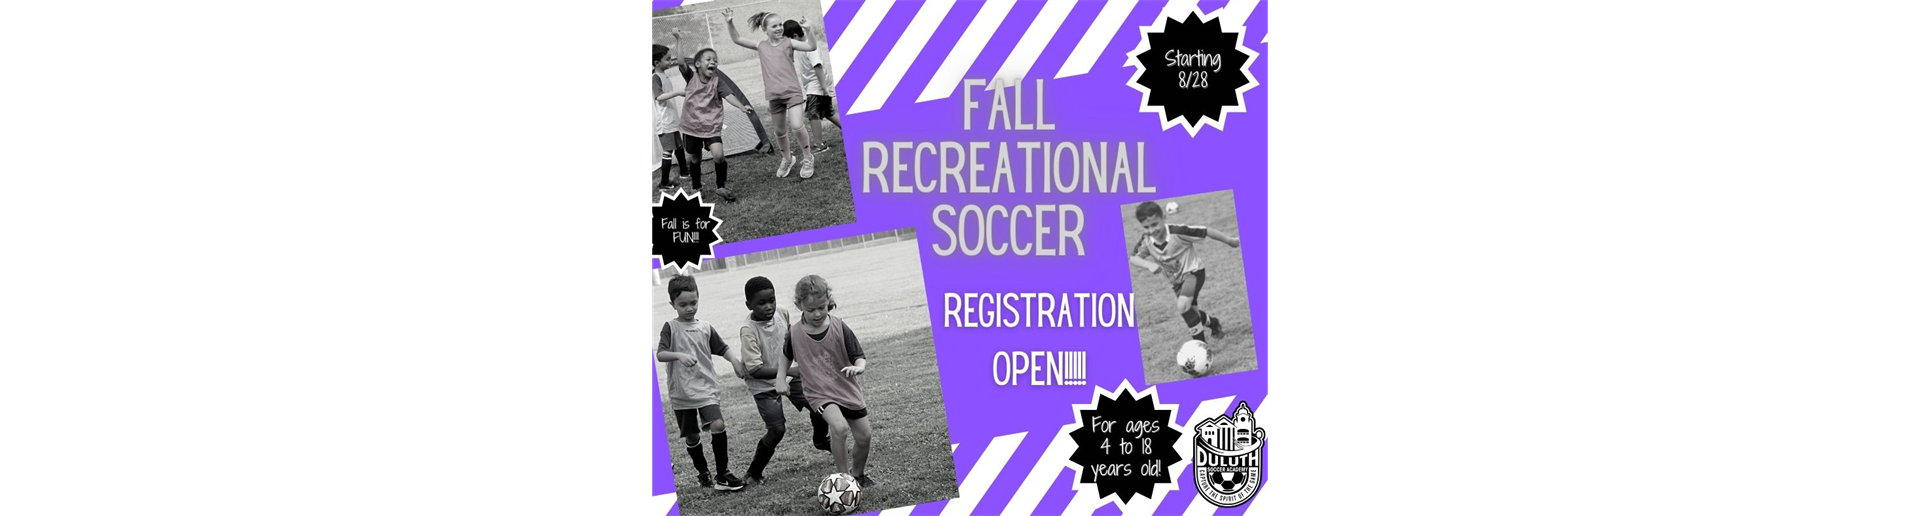 Fall Recreational Soccer Registration OPEN!!!